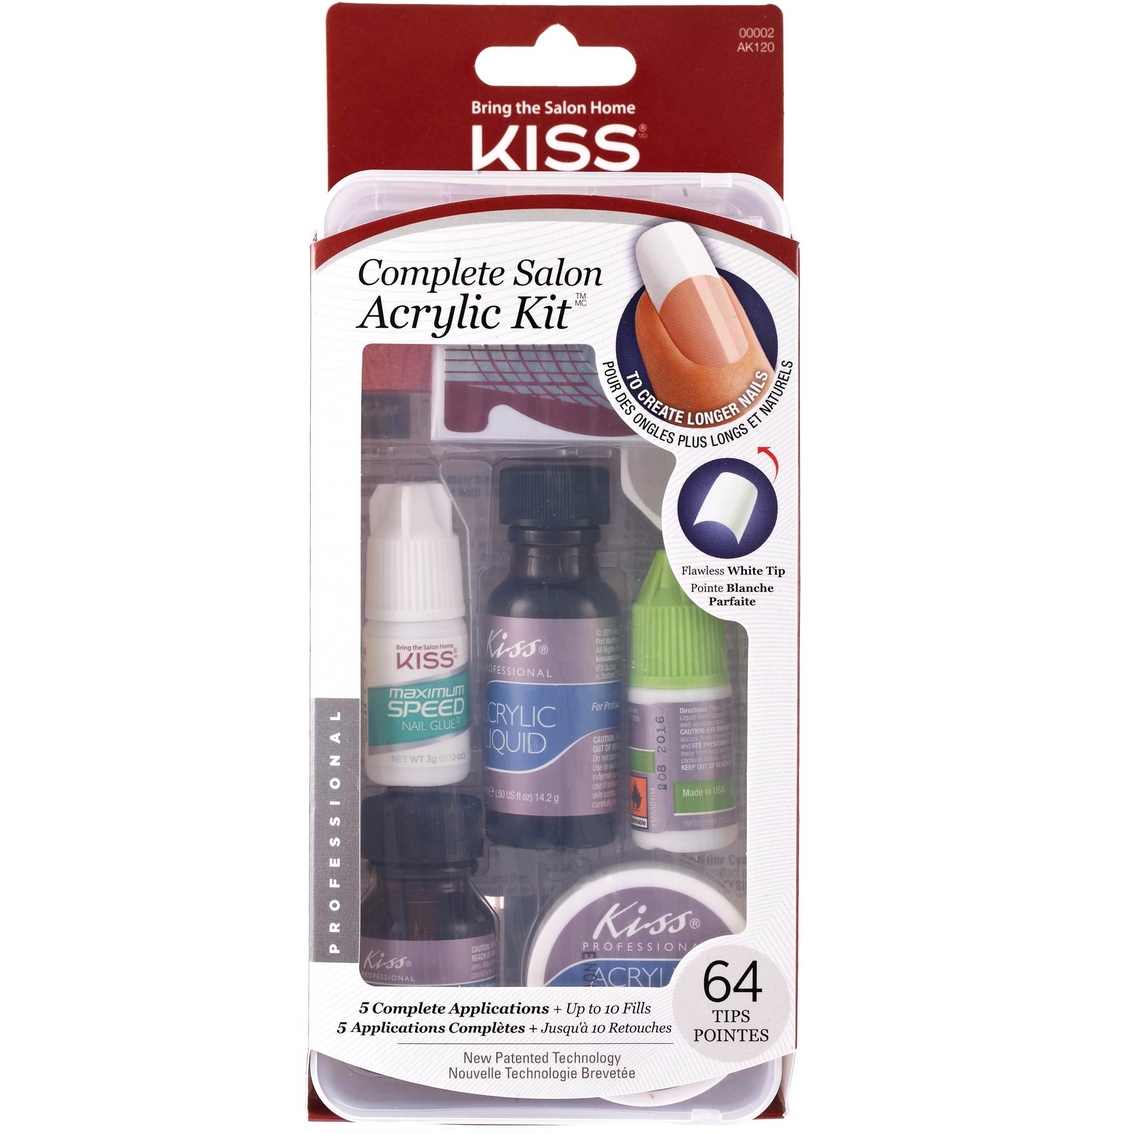 KISS Complete Salon Acrylic Nail Kit